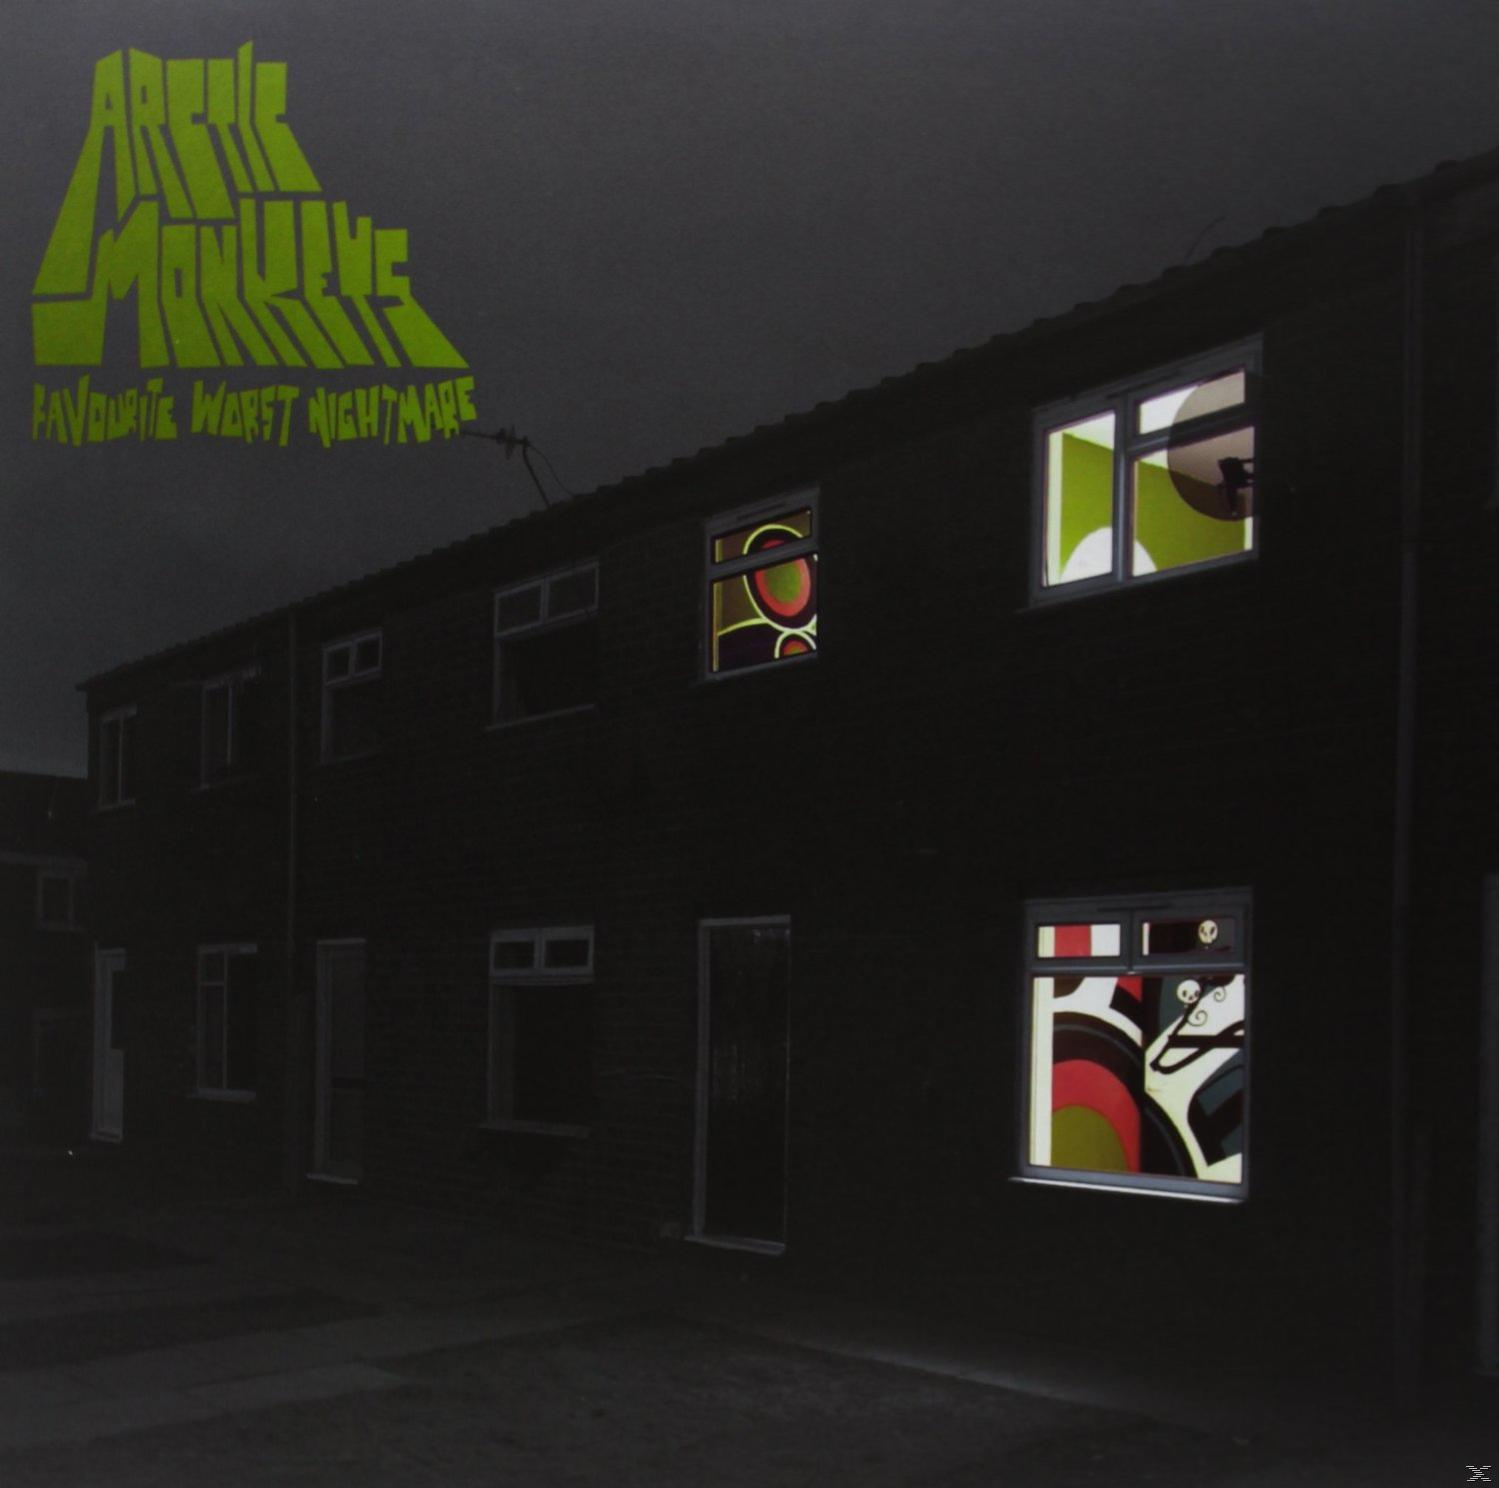 Arctic Monkeys - - Nightmare Favourite Worst (Vinyl)